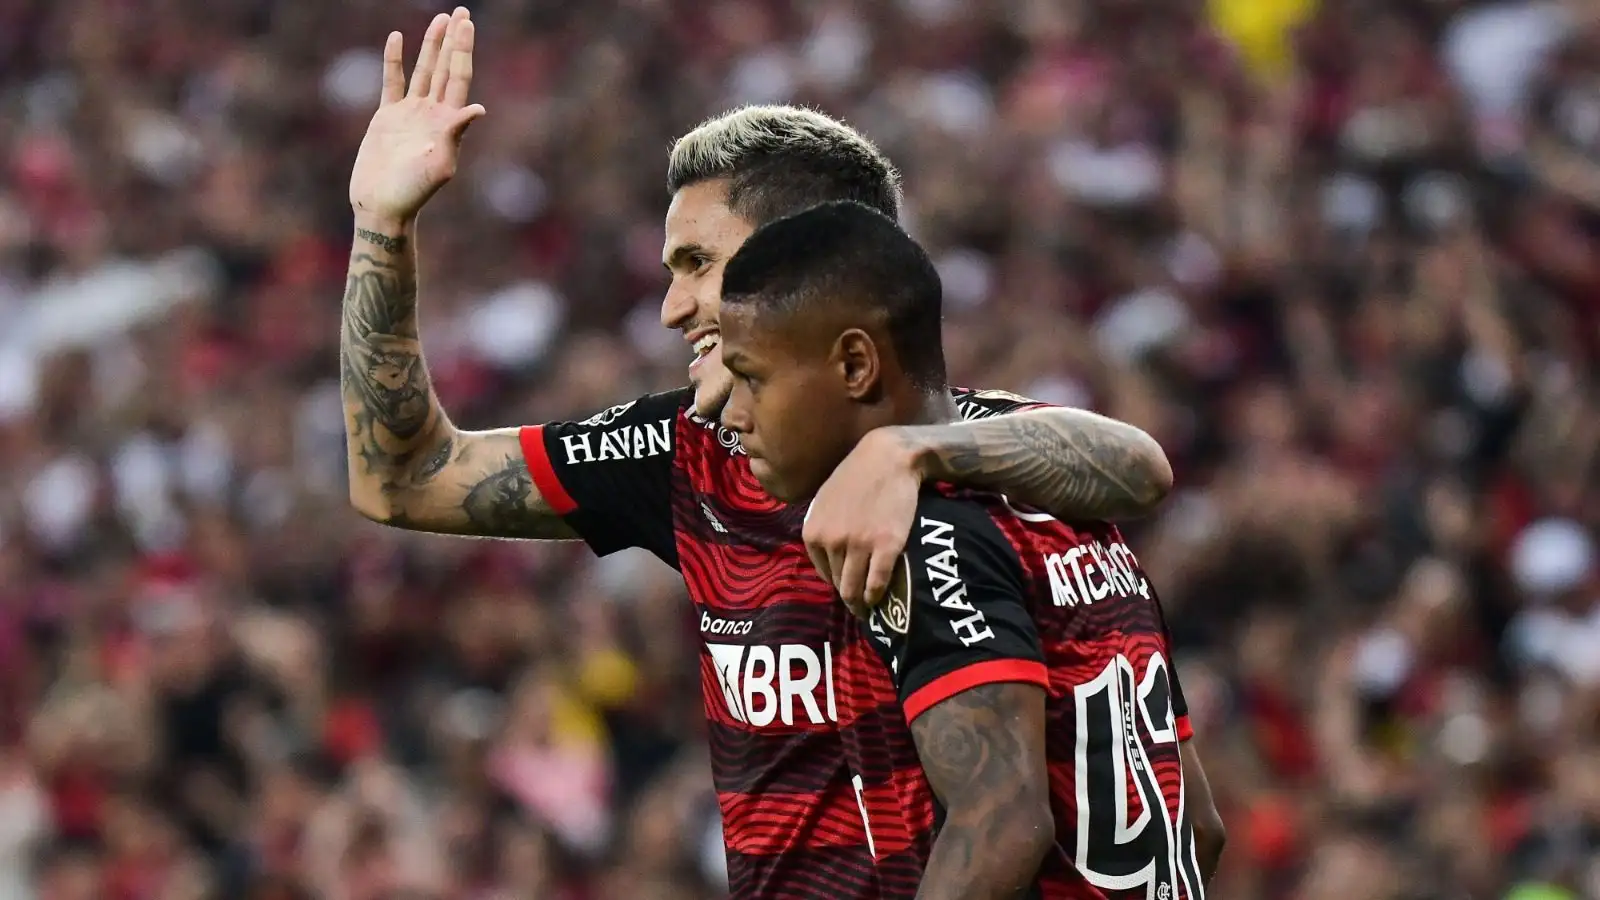 Pedro do Flamengo celebrates his fourth goal for Flamengo with Matheus Franca